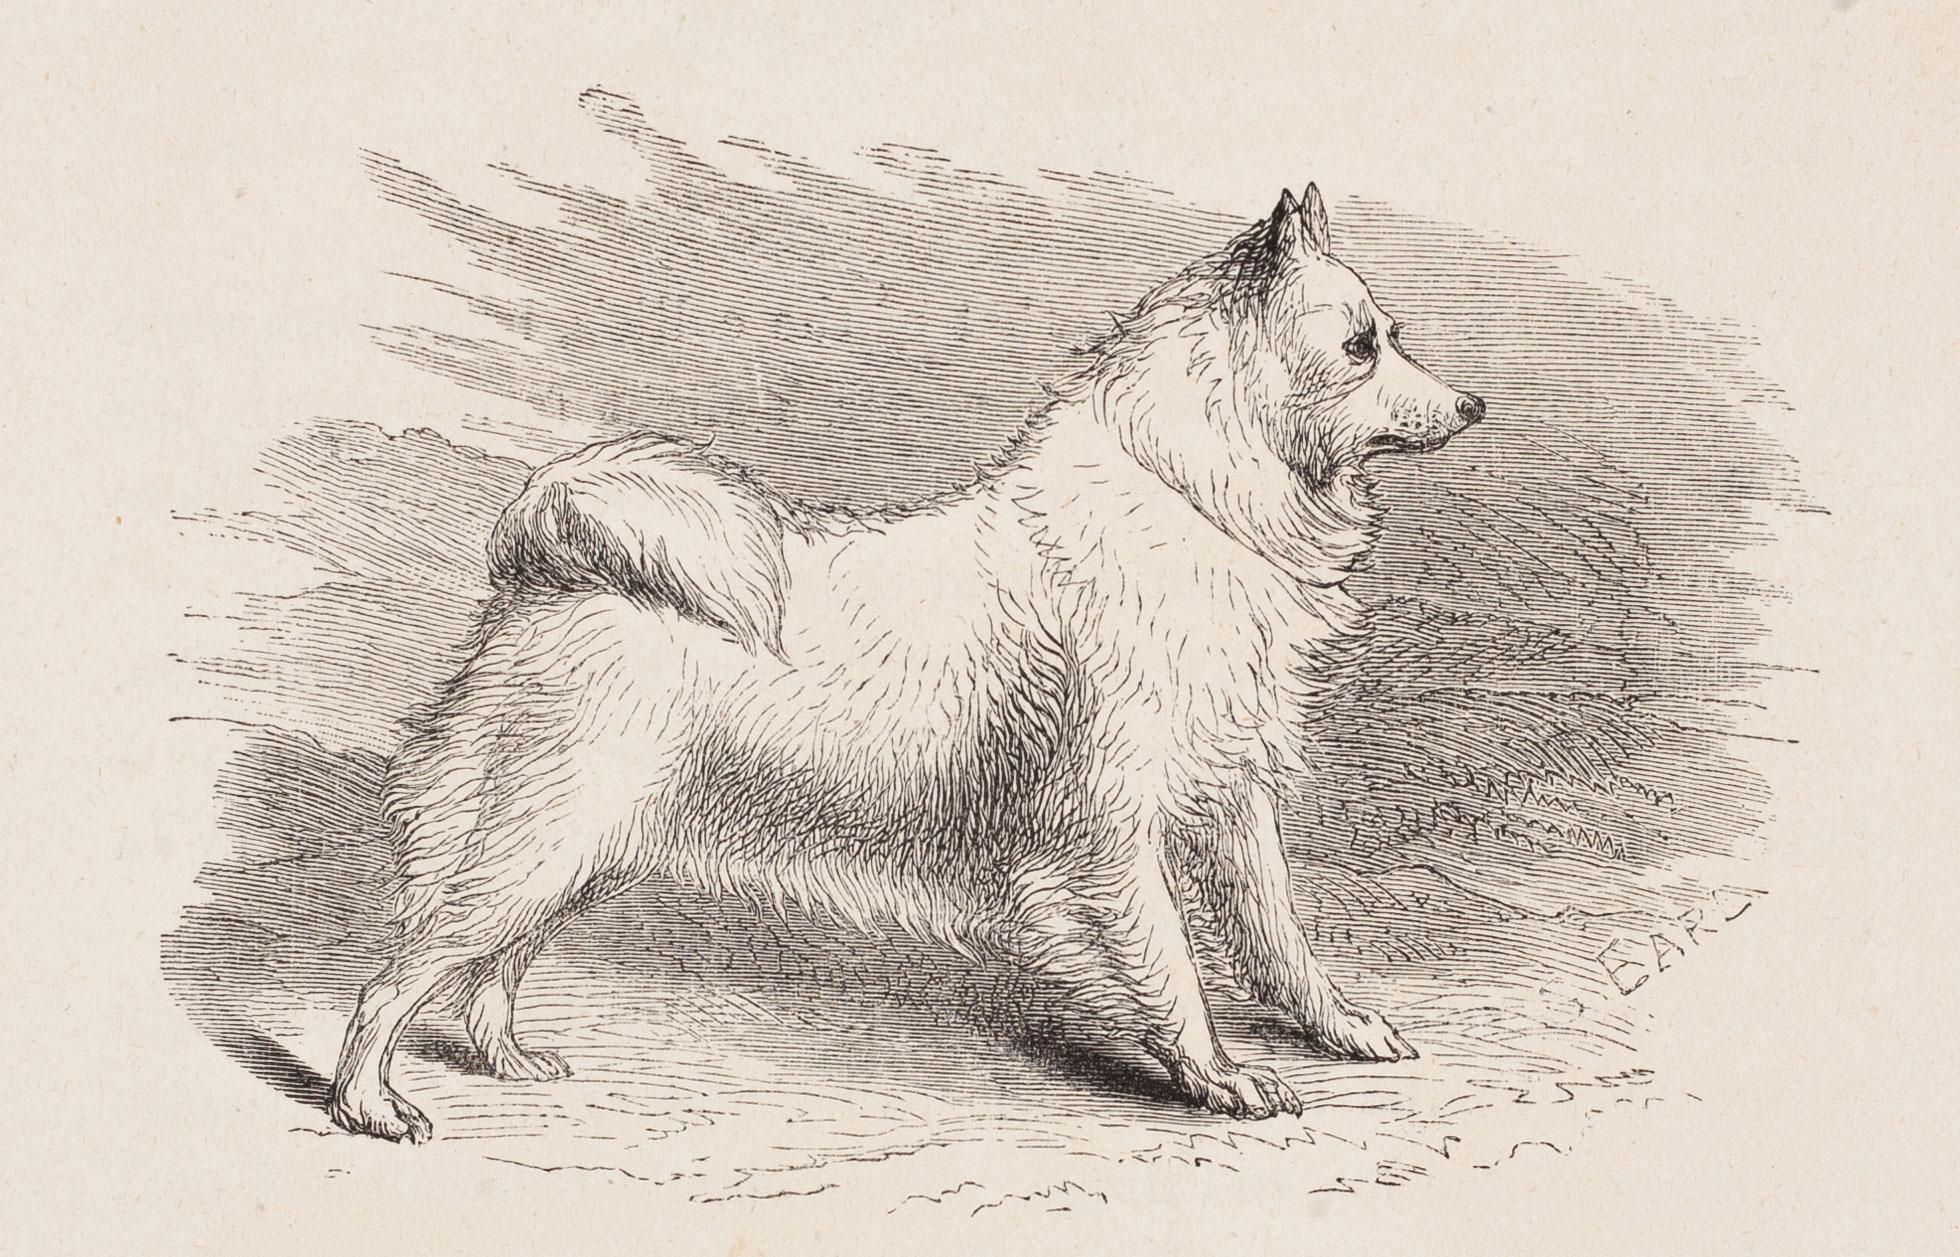 G. Earl Animal Print - Pomeranian or Spitz Dog